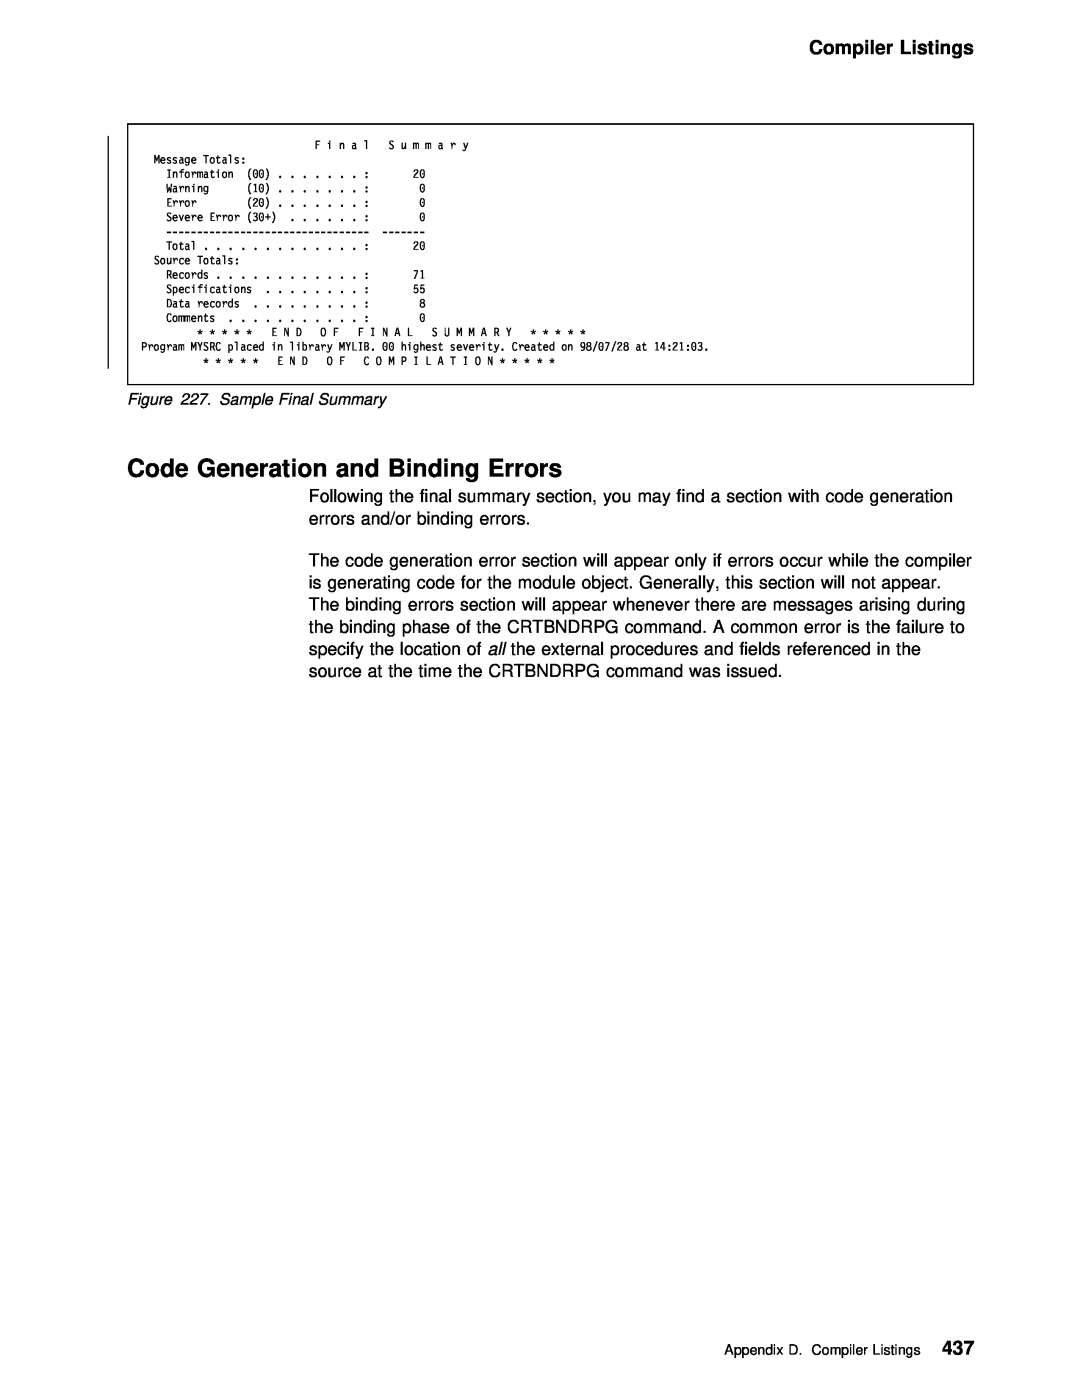 IBM AS/400 manual Code Generation and Binding Errors, Compiler Listings, Sample Final Summary 